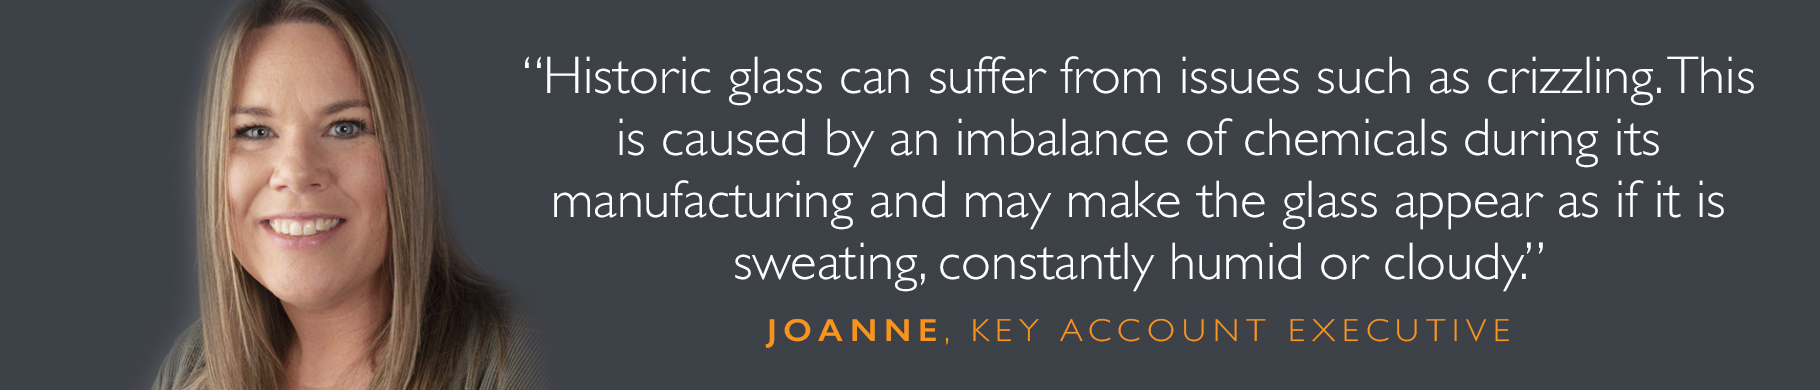 Joanne crizzling glass 